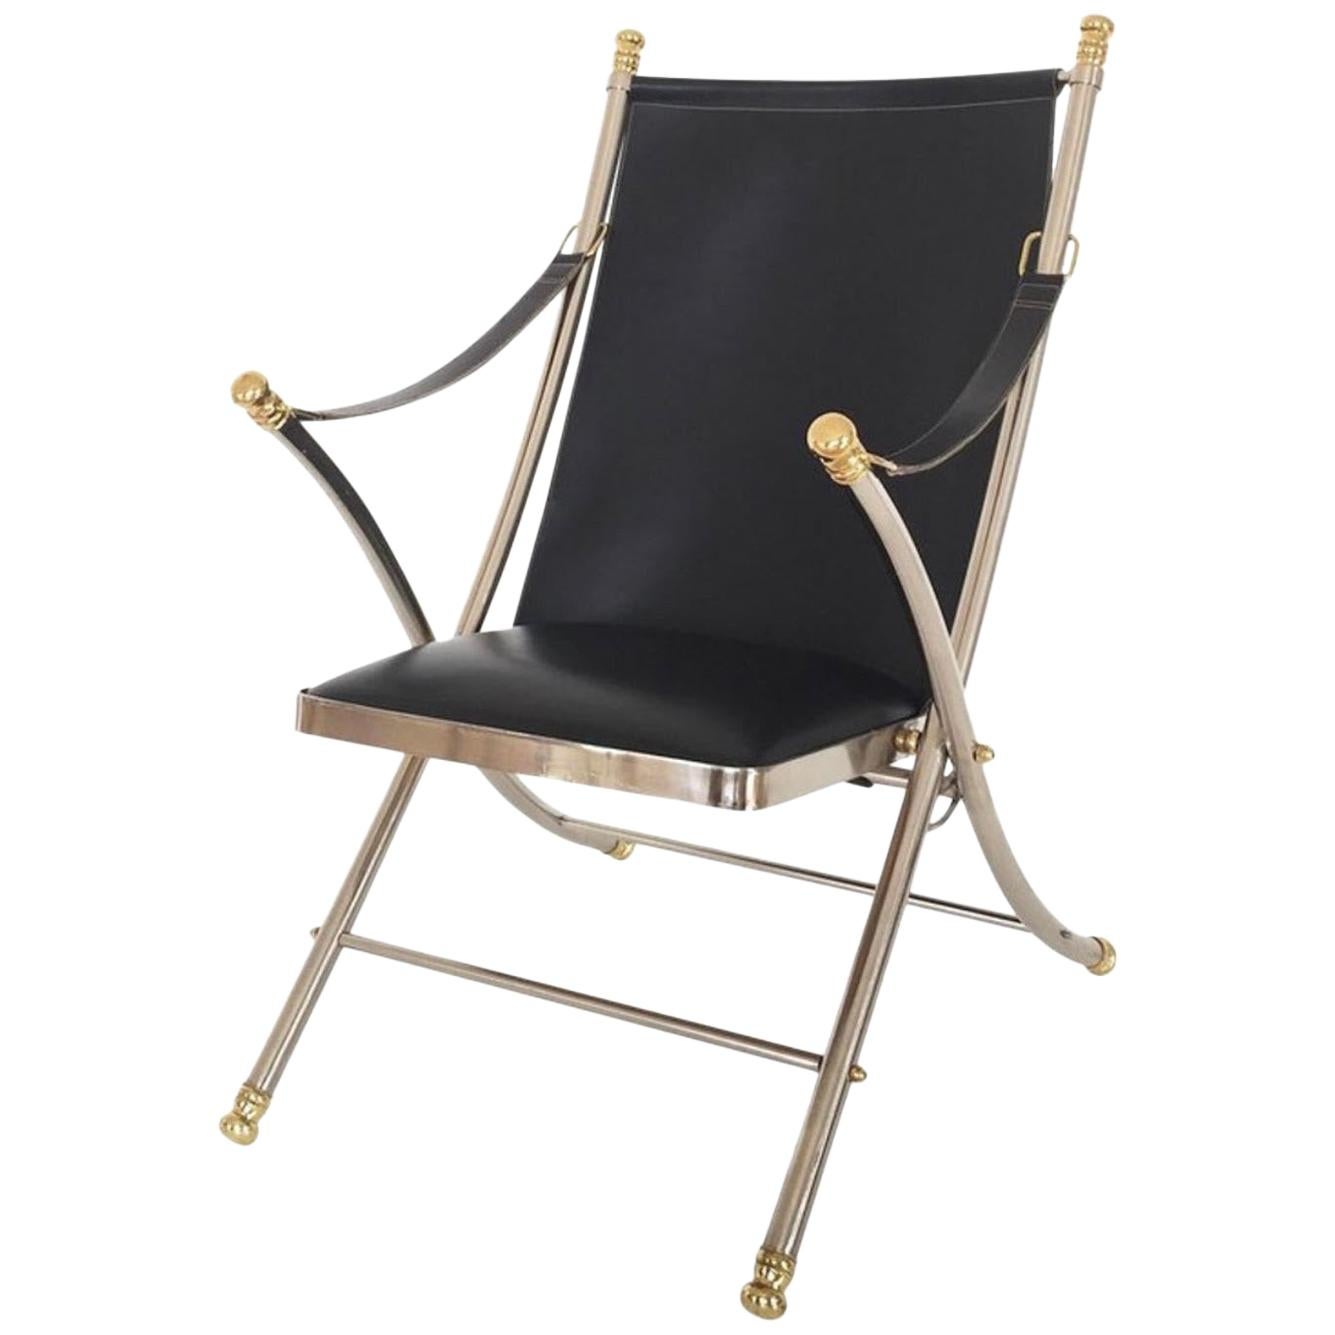 Pair of Maison Jansen Style Midcentury Steel and Brass Chairs